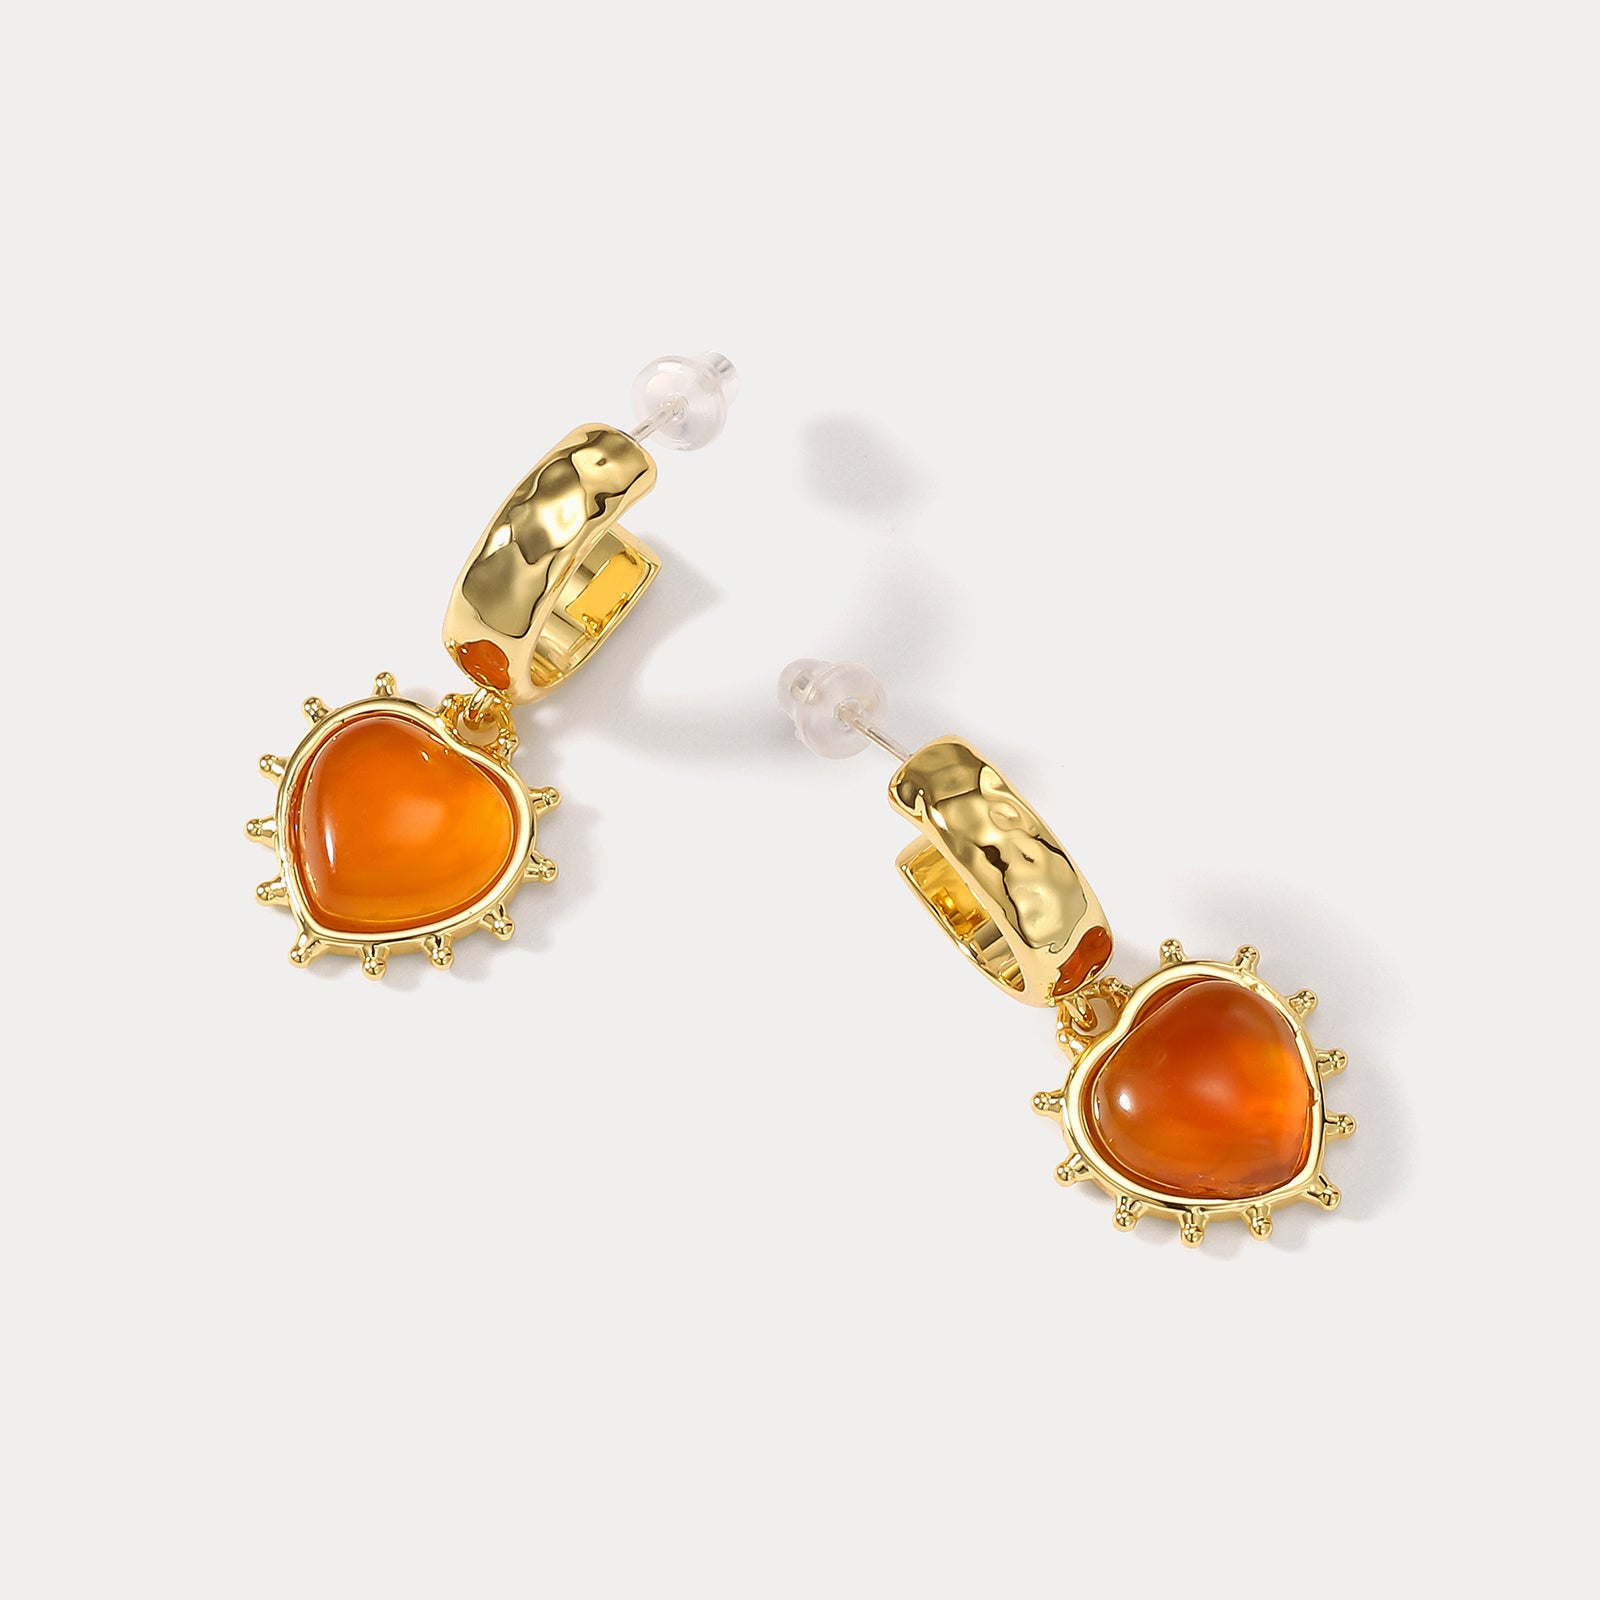 Romantic Heart Orange Sparkly Earrings